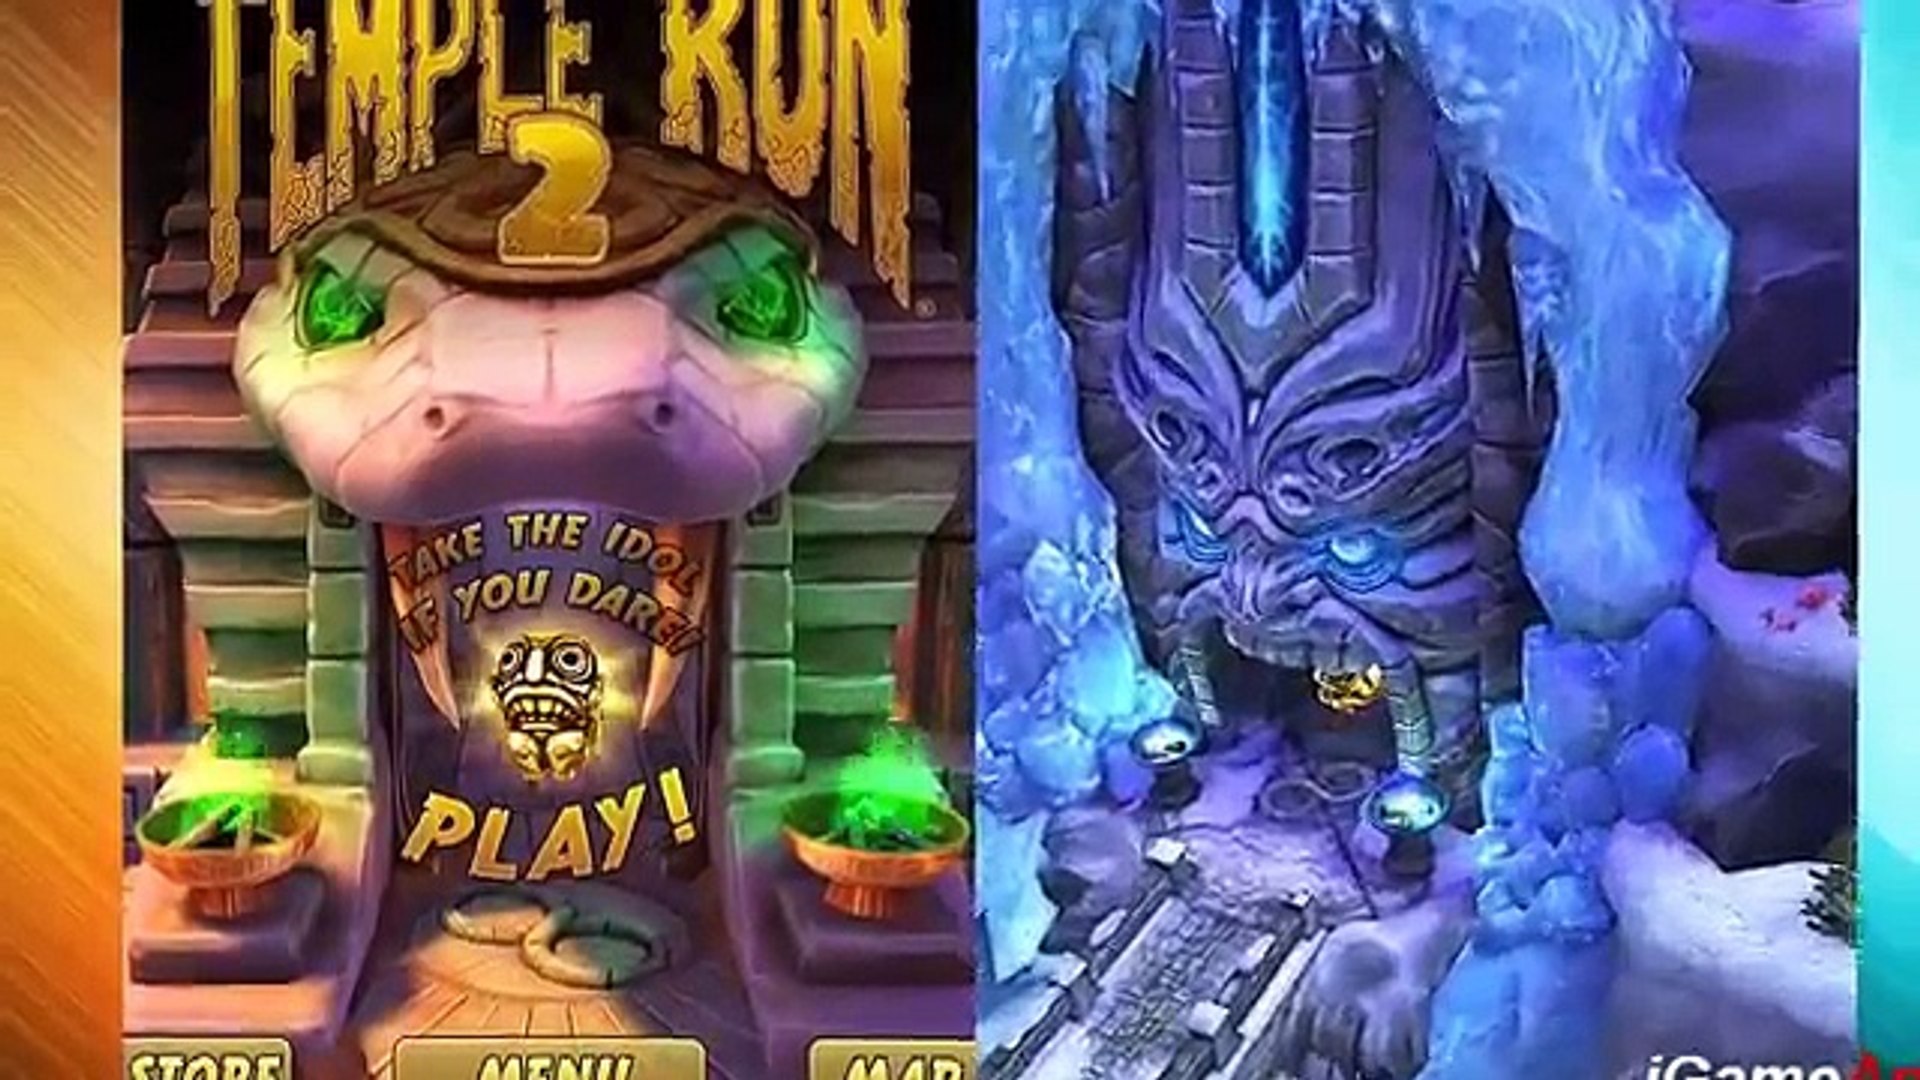 Temple Run 2 iPad Gameplay 